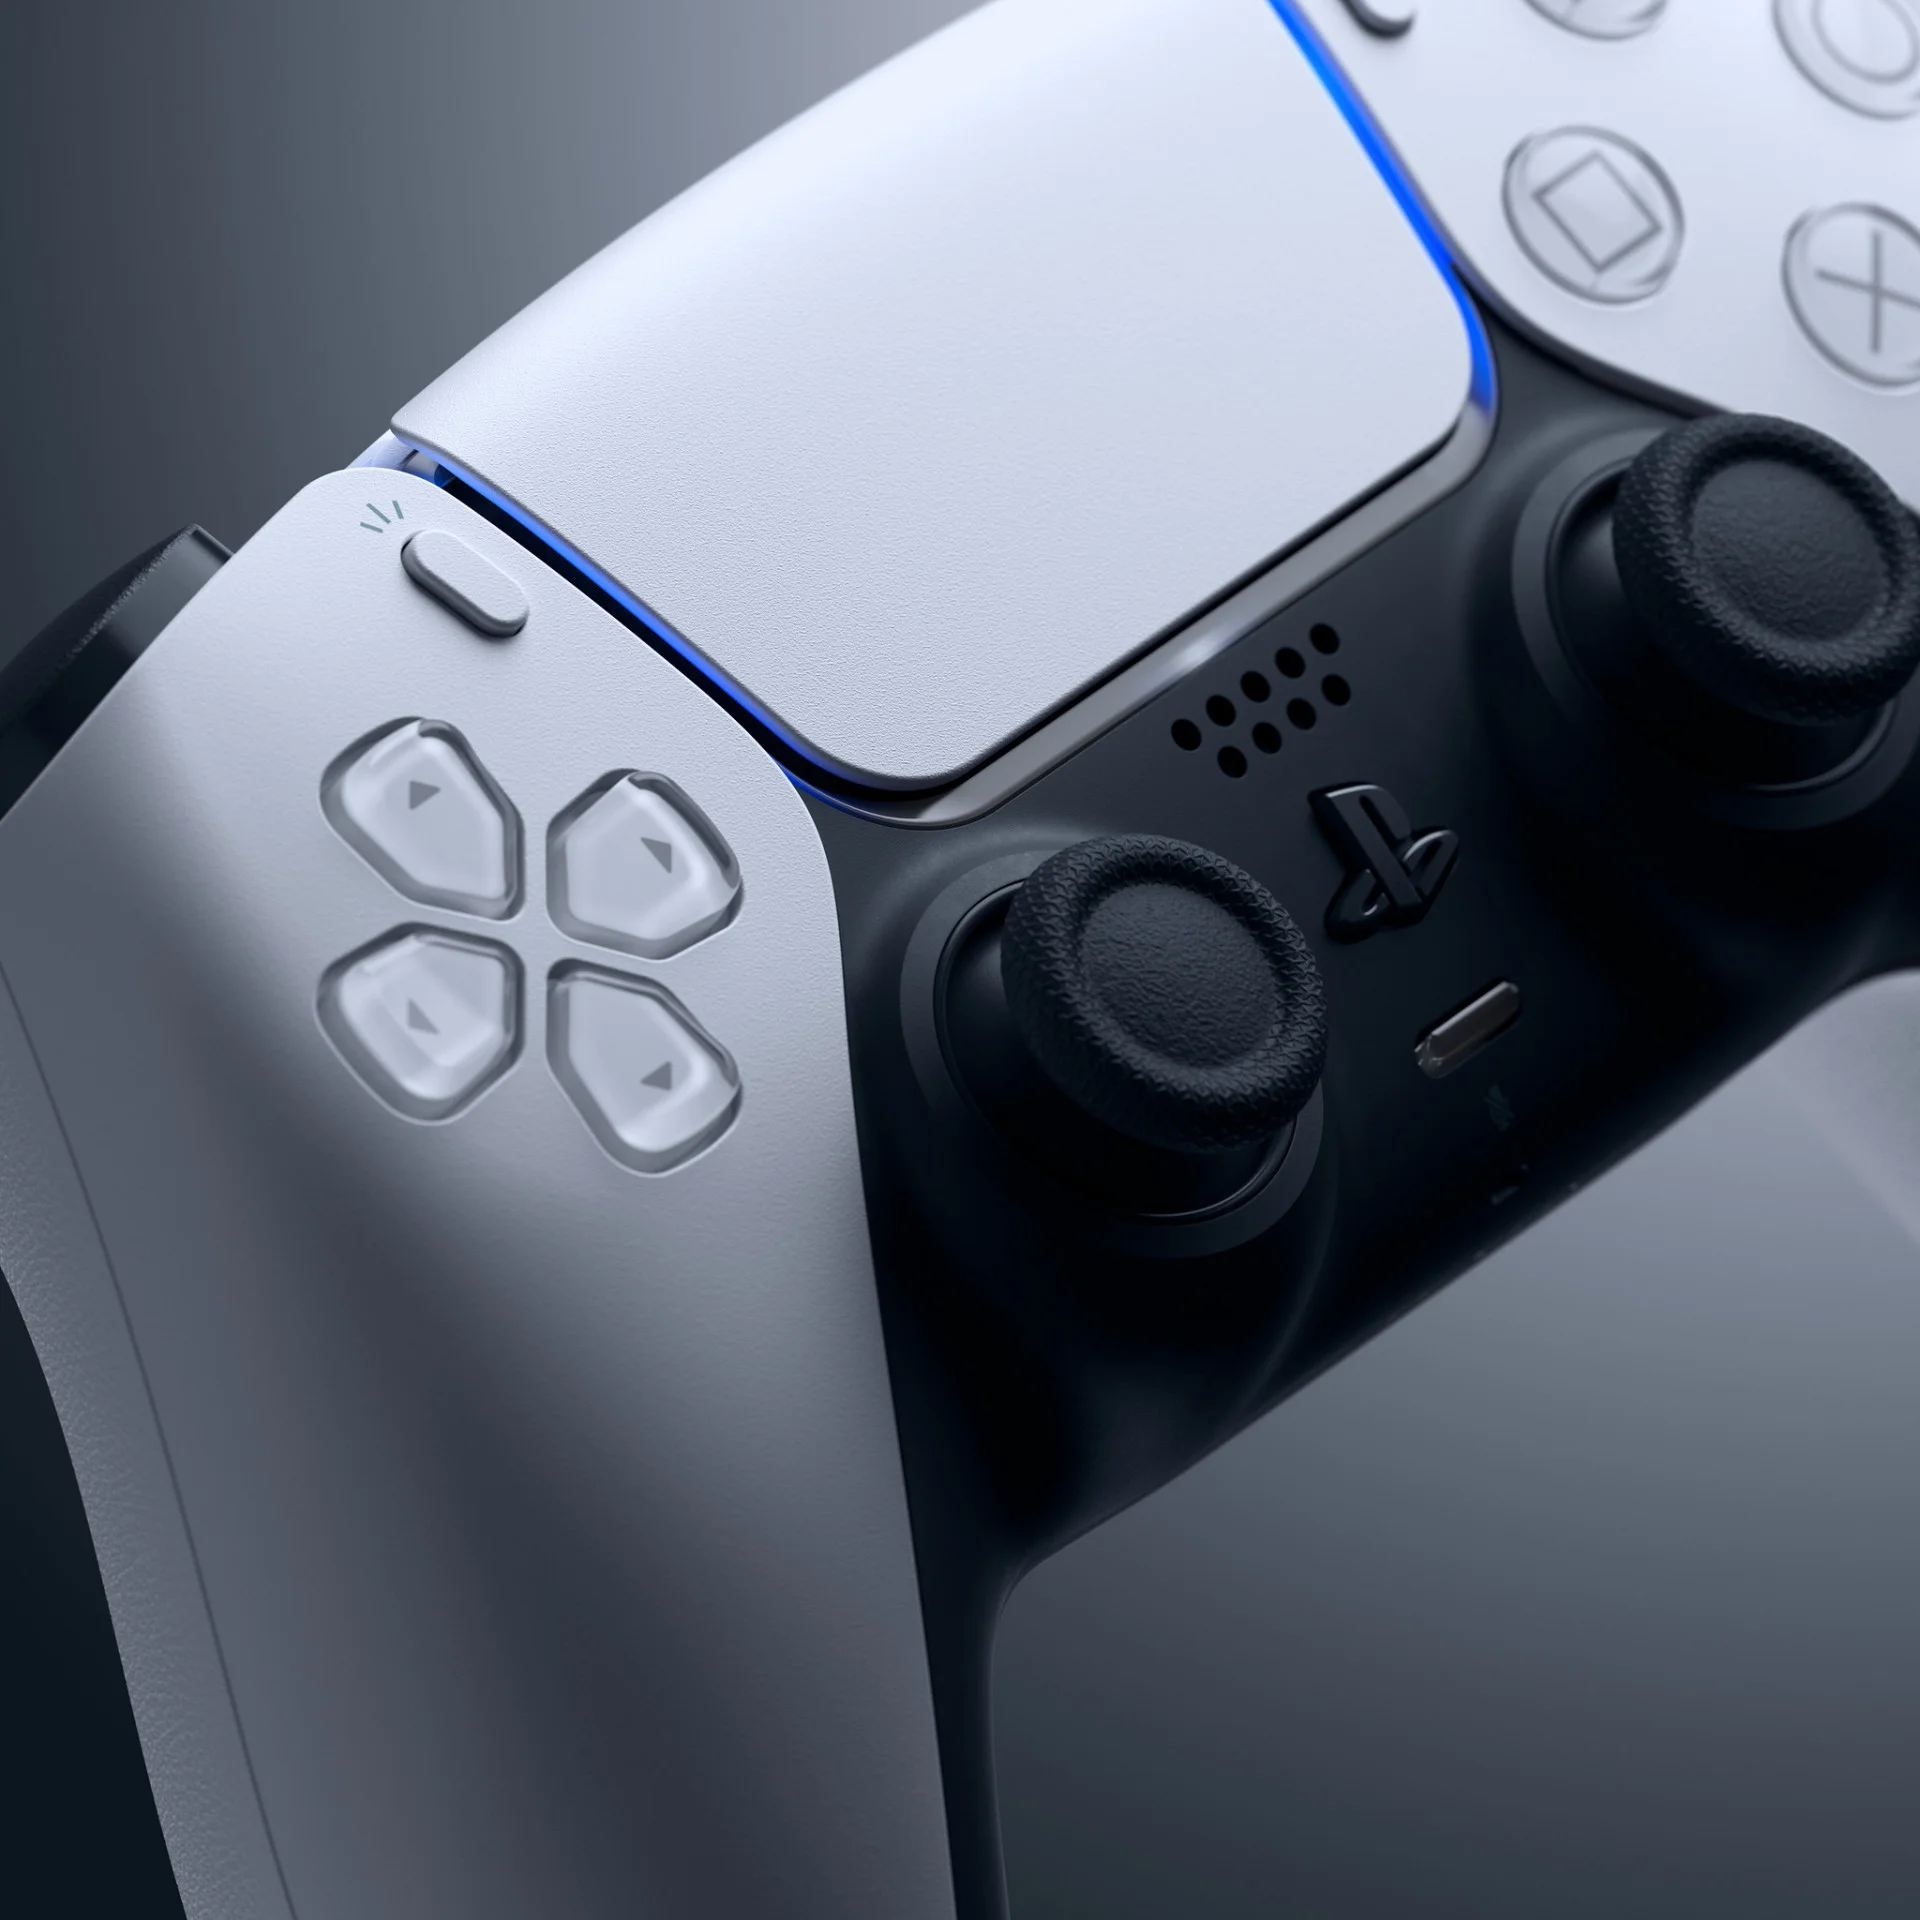 Sony выпустила 28 HQ-фото PlayStation 5 и её аксессуаров - фото 10